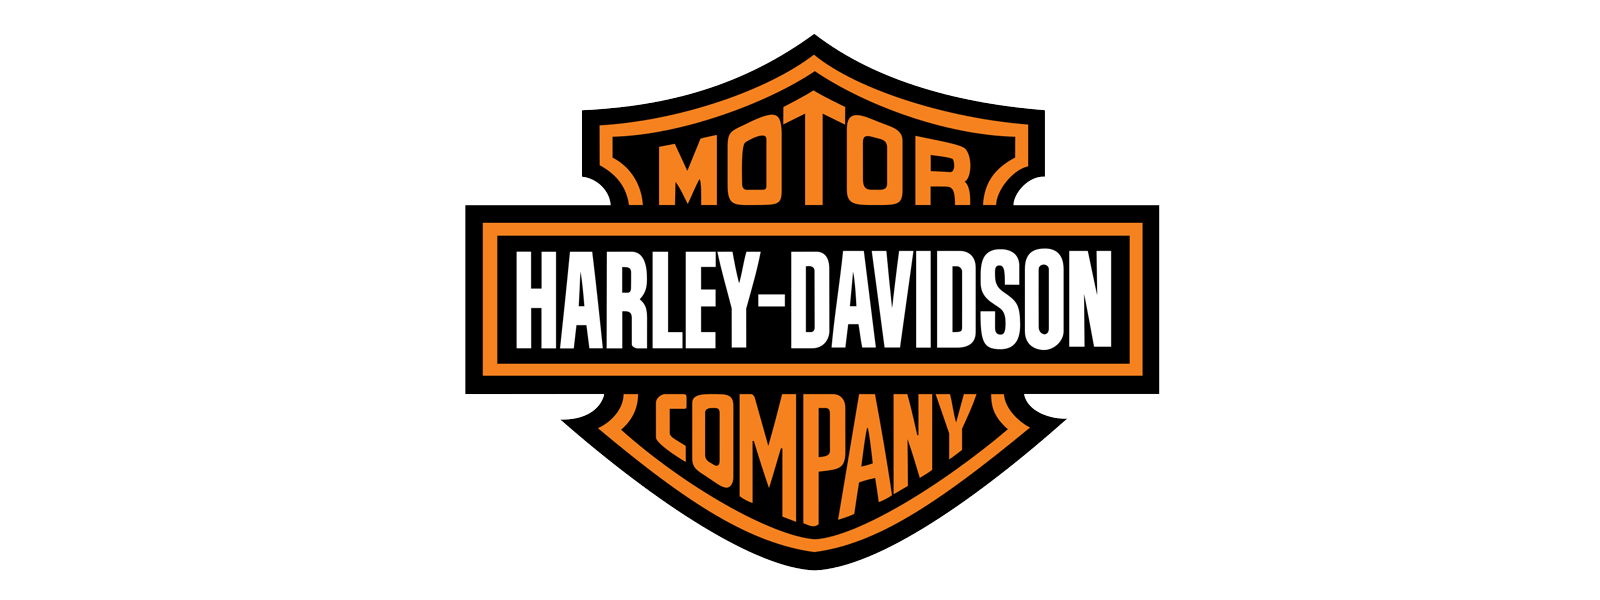 Harley davidson logo motorcycle brands logo specs history png